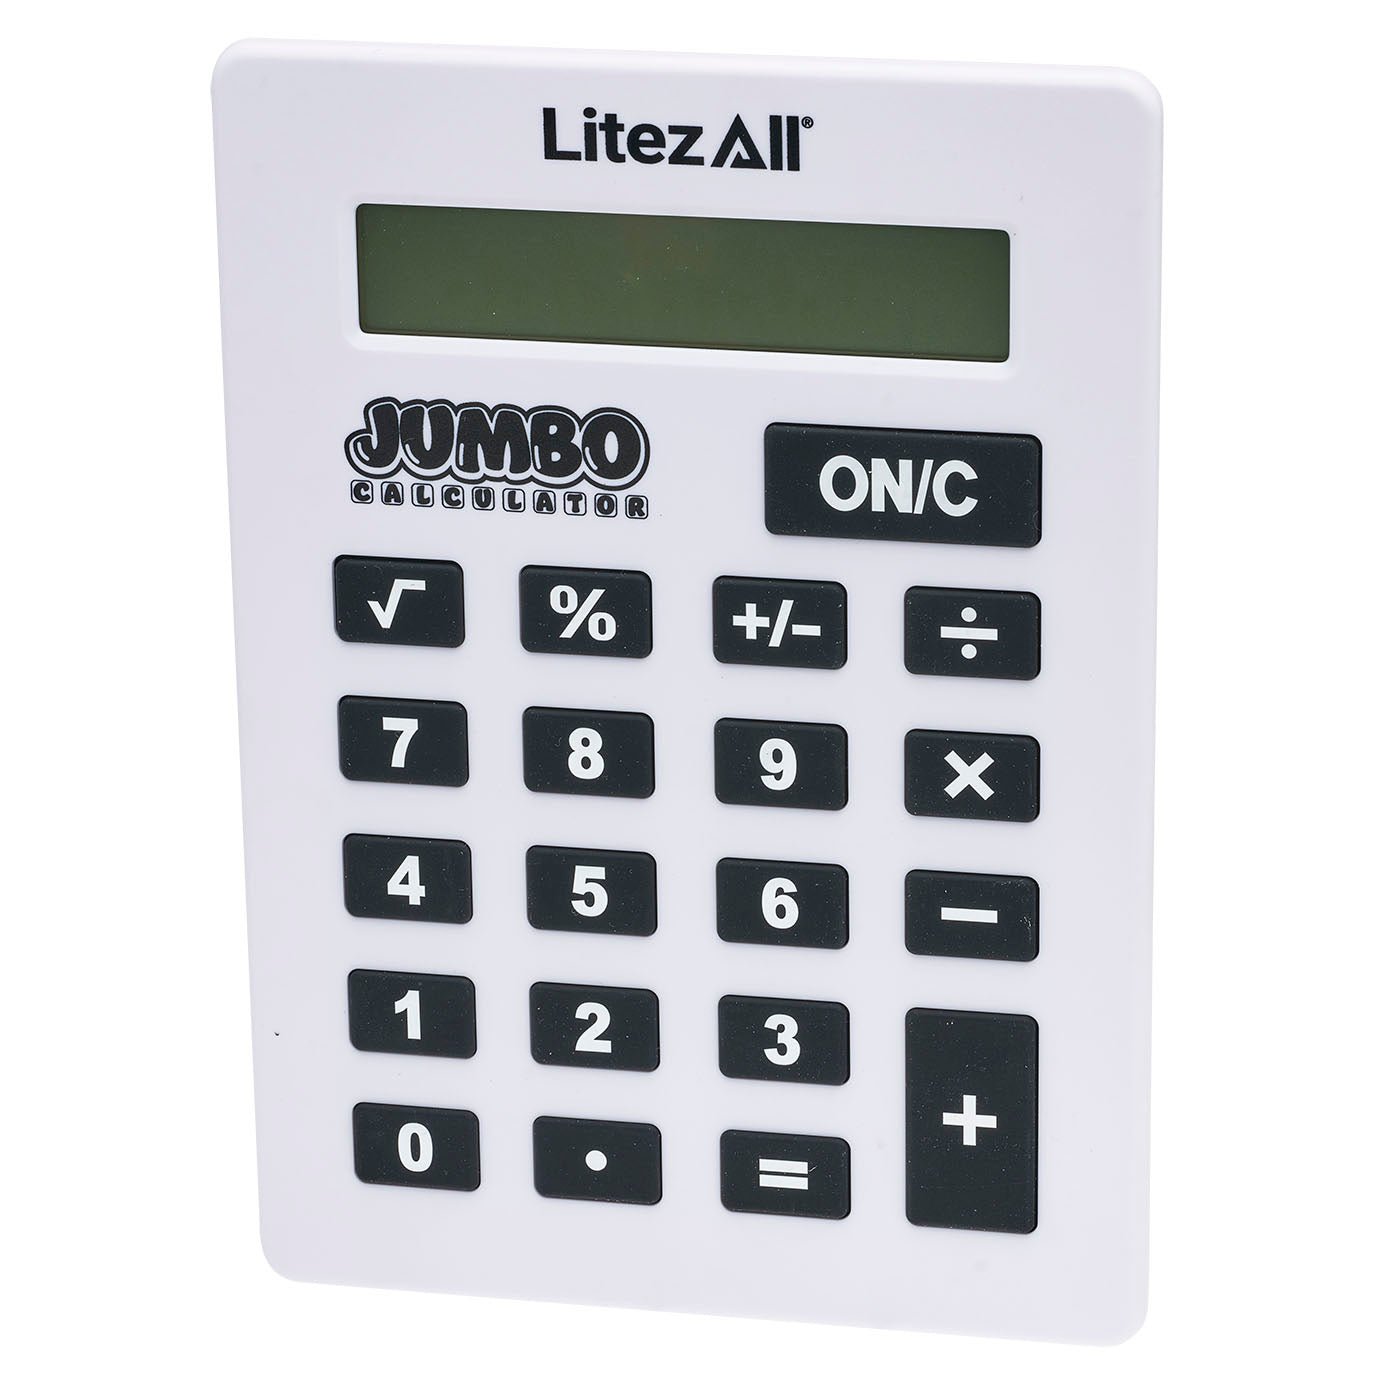 LitezAll Jumbo Calculator - LitezAll - Novelties - 22